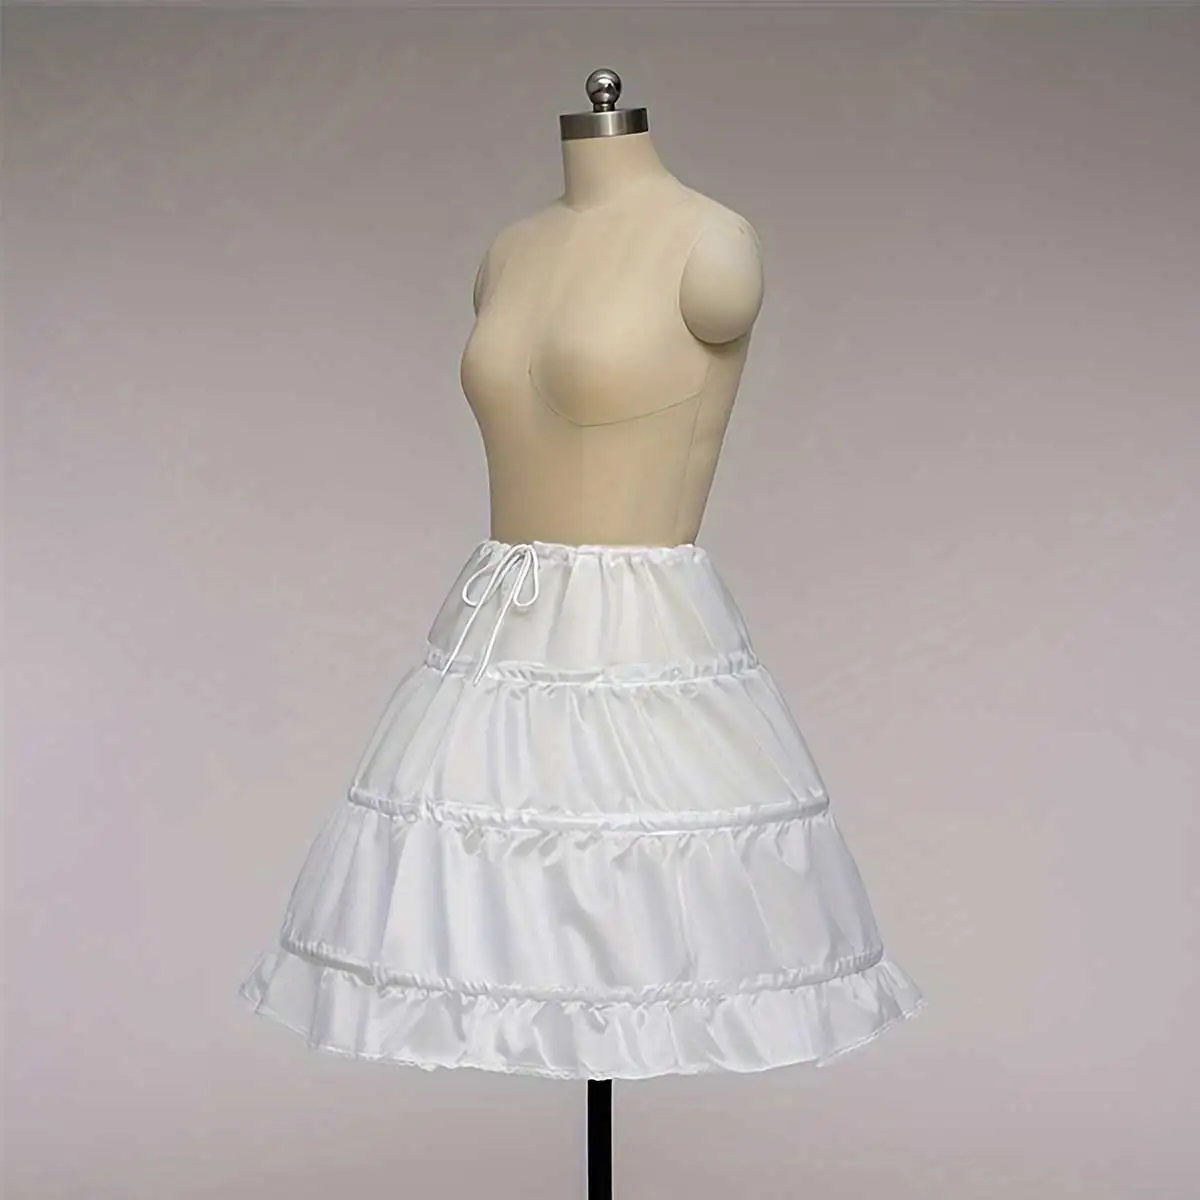 Kinder Vintage Short Petticoat für Mädchen Ballett Blase Tutu Rock Rock N Roll Rockabilly Rock Tutu Unterrock Slips